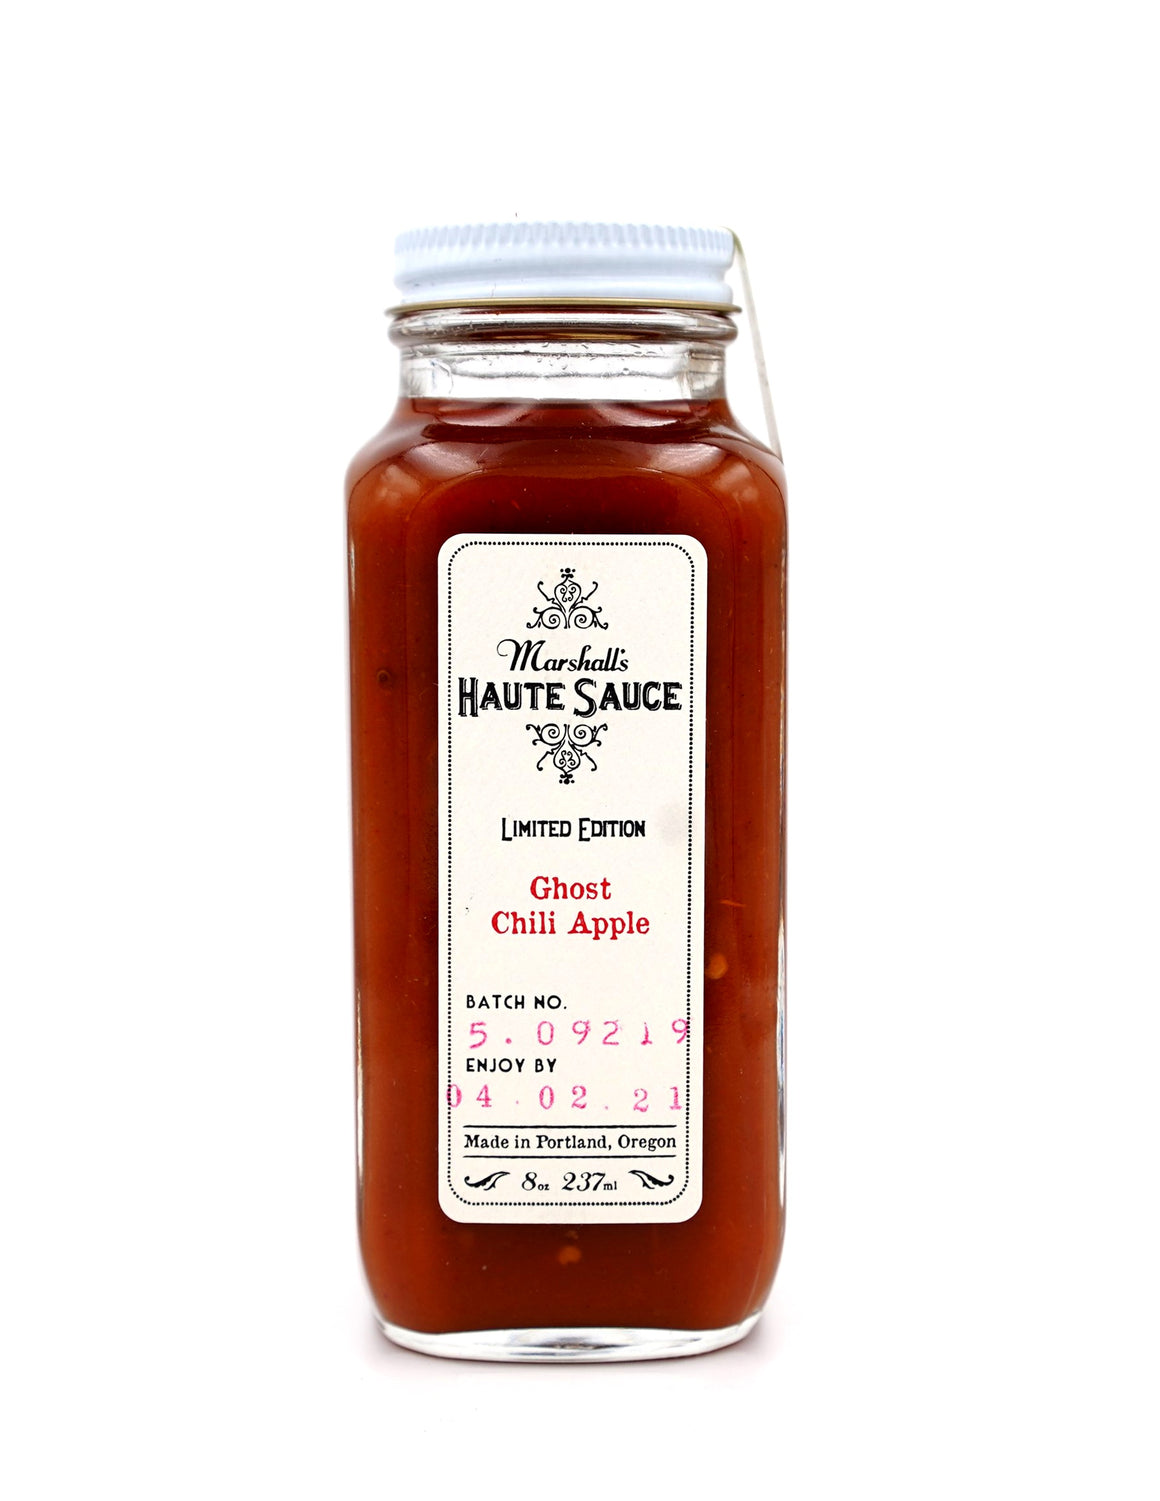 Marshall's Haute Sauce - Ghost Chili Apple